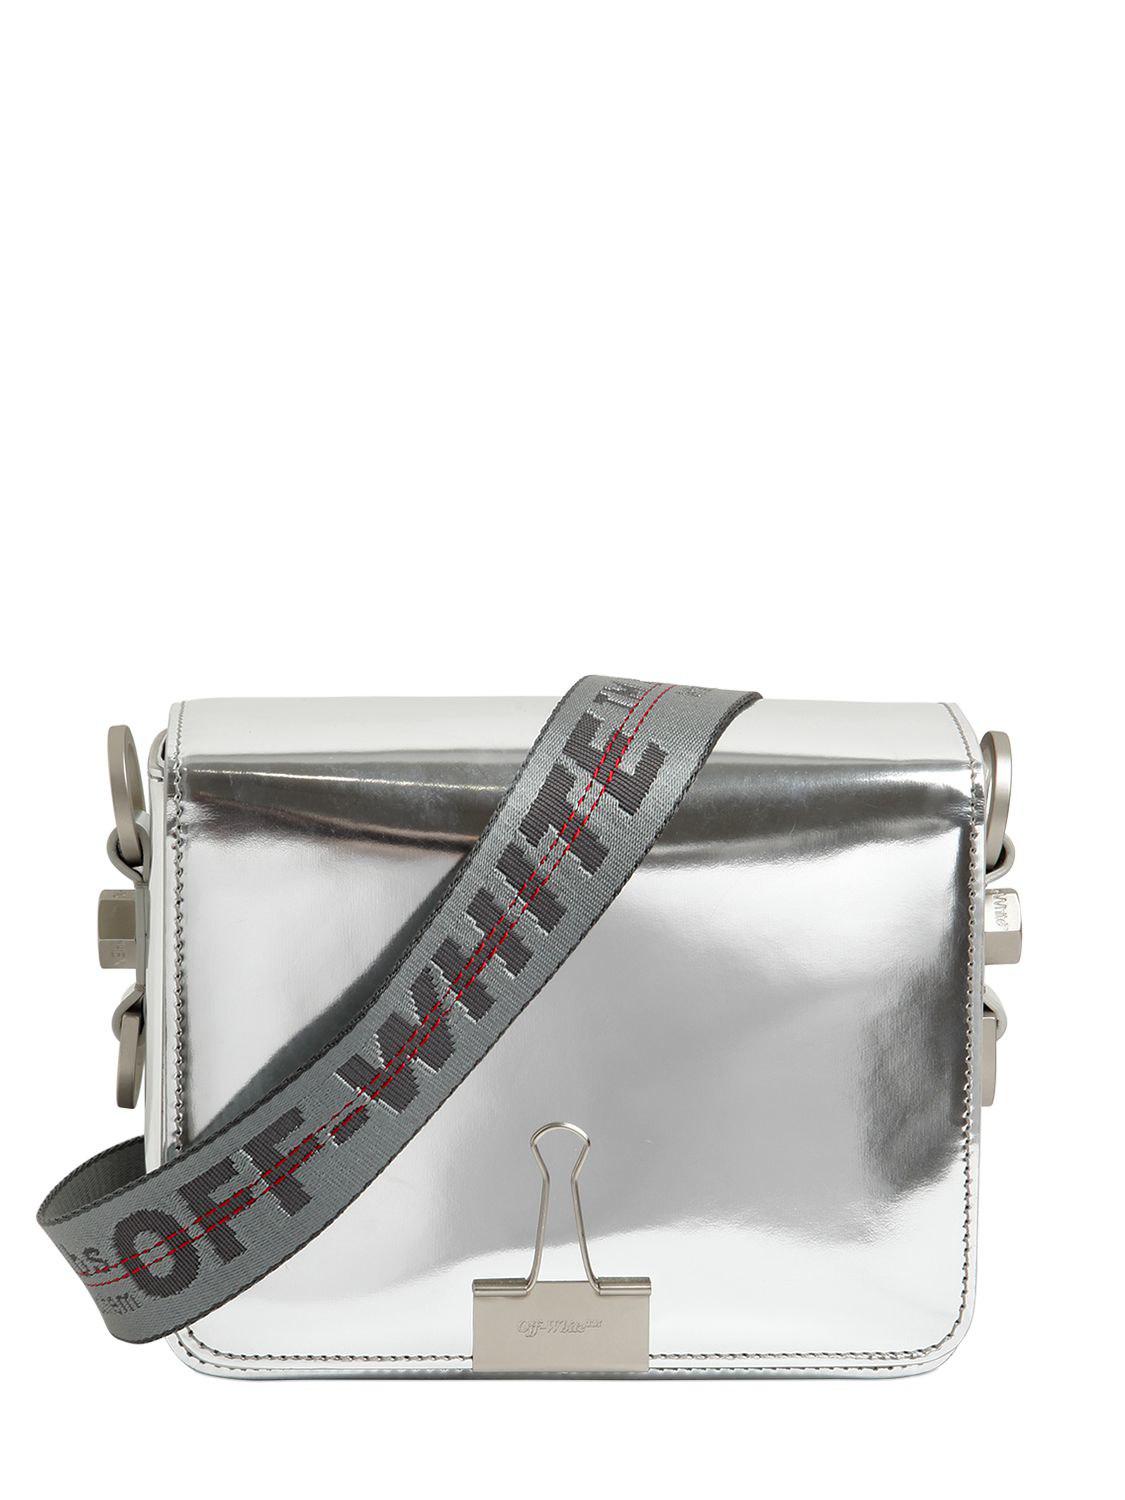 Off-White c/o Virgil Abloh Binder Clip Mirror Leather Shoulder Bag in  Metallic | Lyst